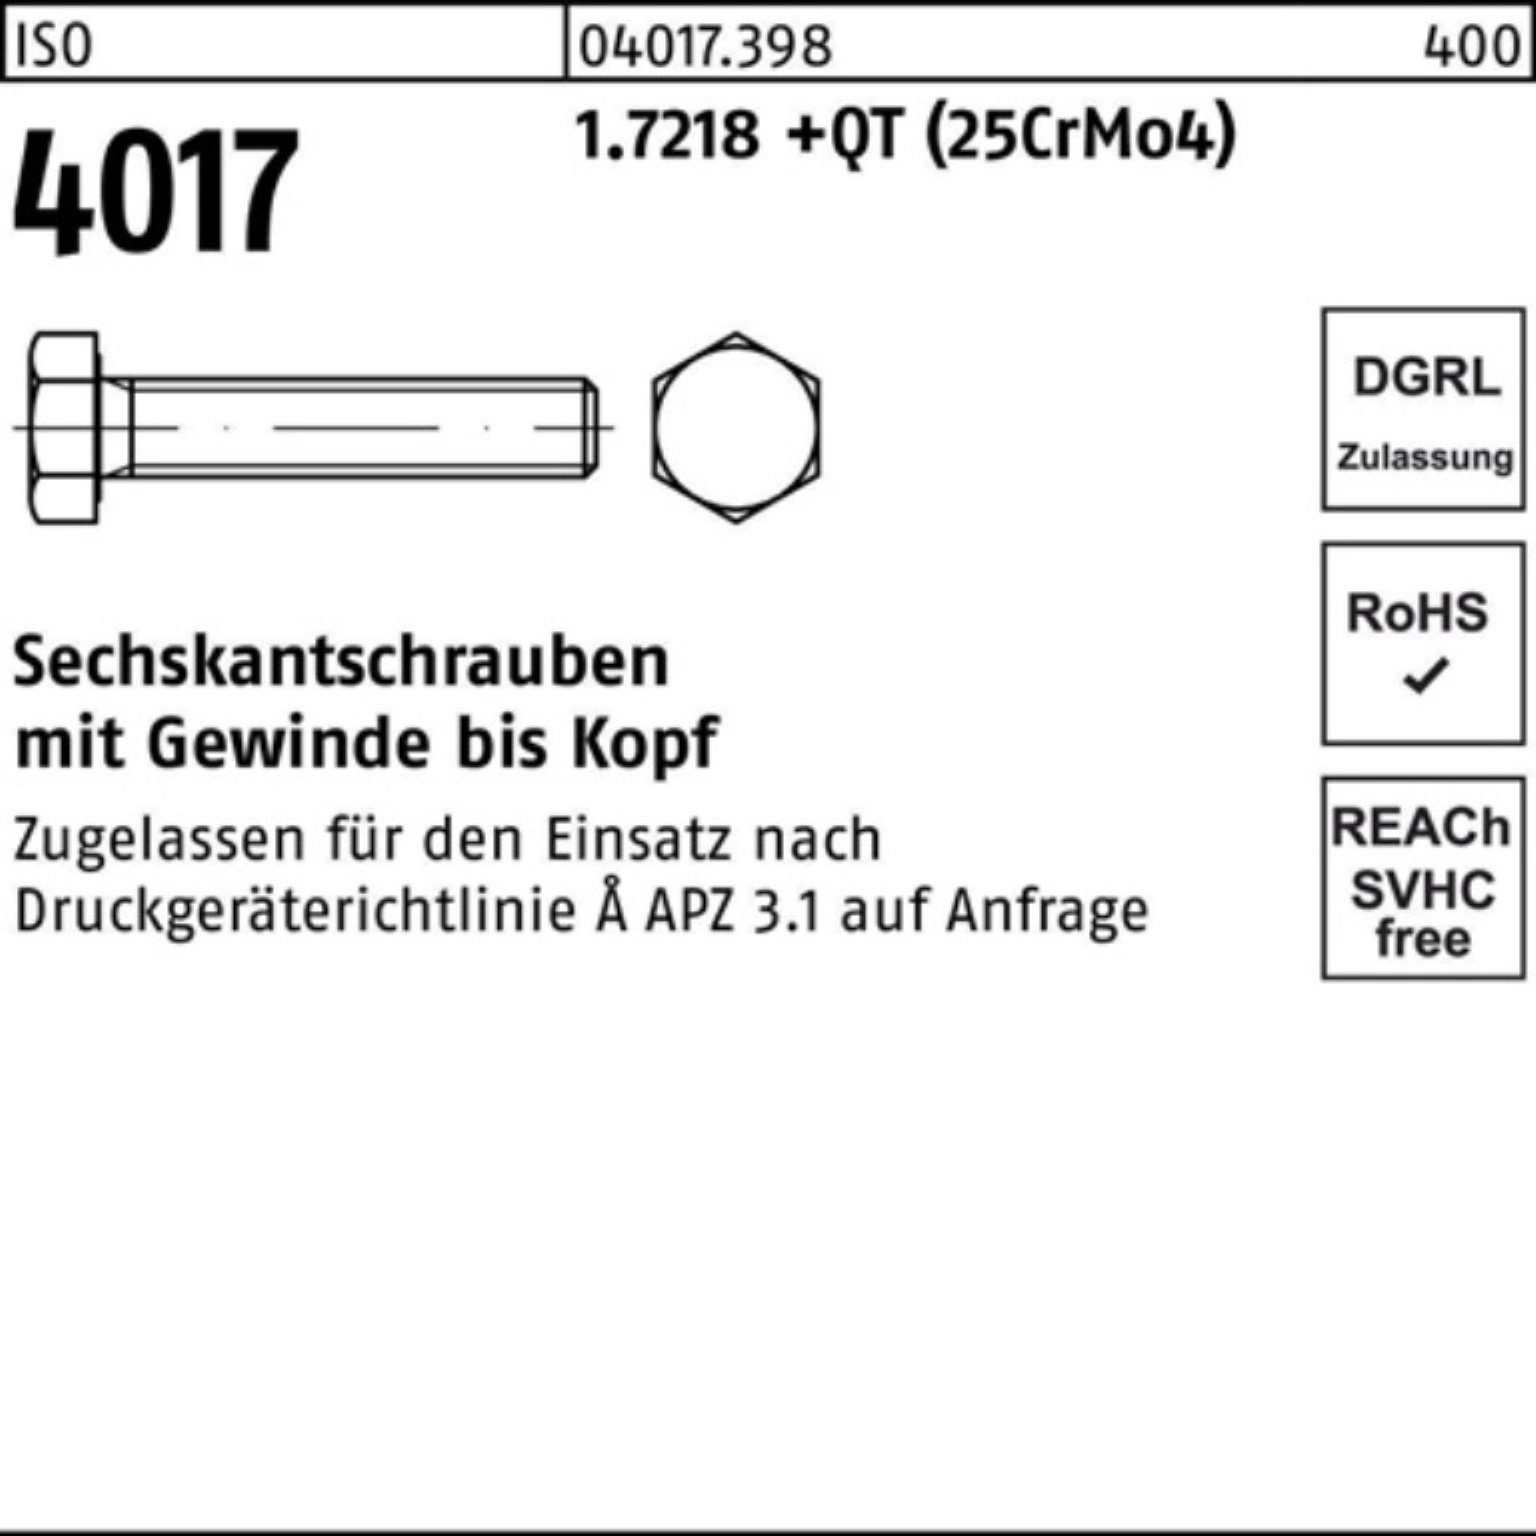 Bufab Sechskantschraube +QT Sechskantschraube Pack 4017 VG (25CrMo4) ISO 160 1.7218 M24x 100er